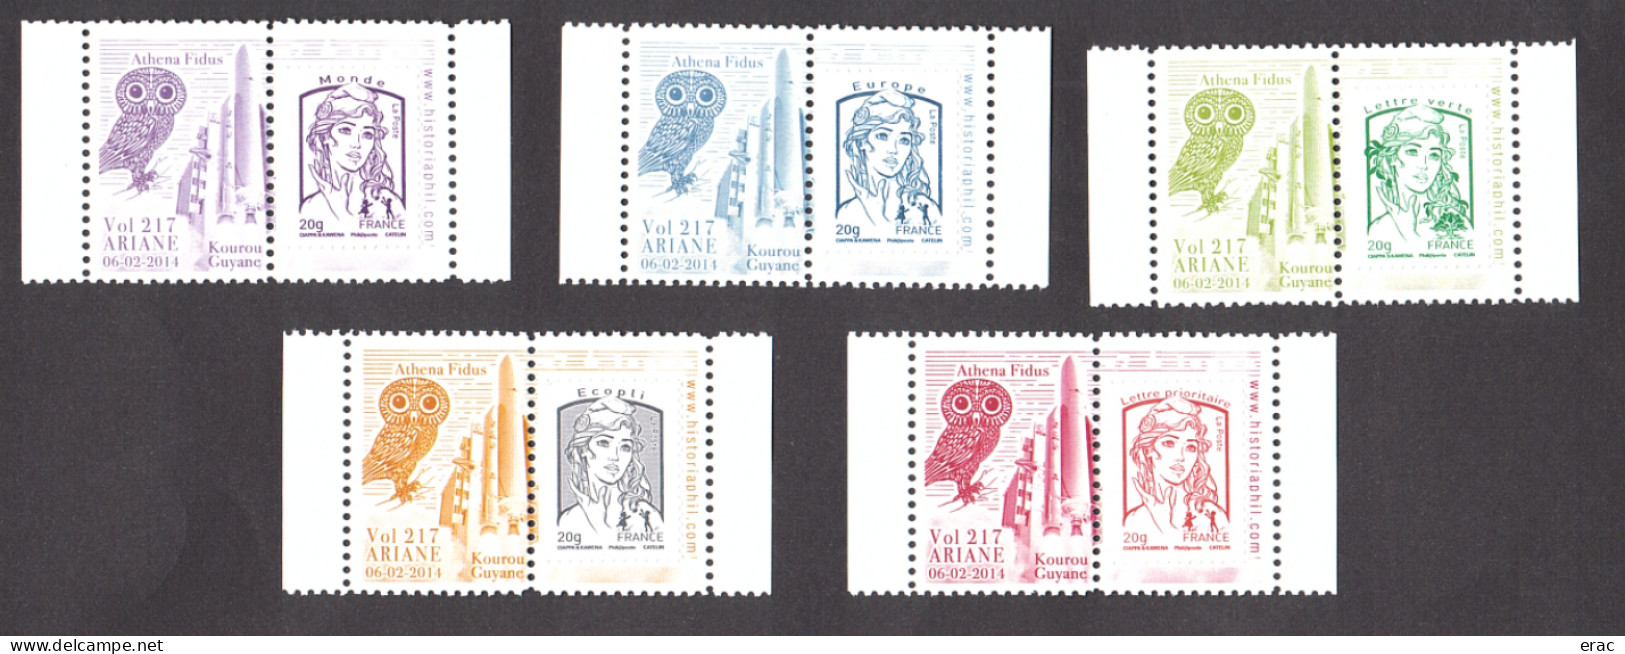 5 Porte-timbres Gommés - 2014 Ariane Vol 217 - Athena Fidus- Avec TVP Marianne De Ciappa & Kawena Neufs - 2013-2018 Marianne Di Ciappa-Kawena